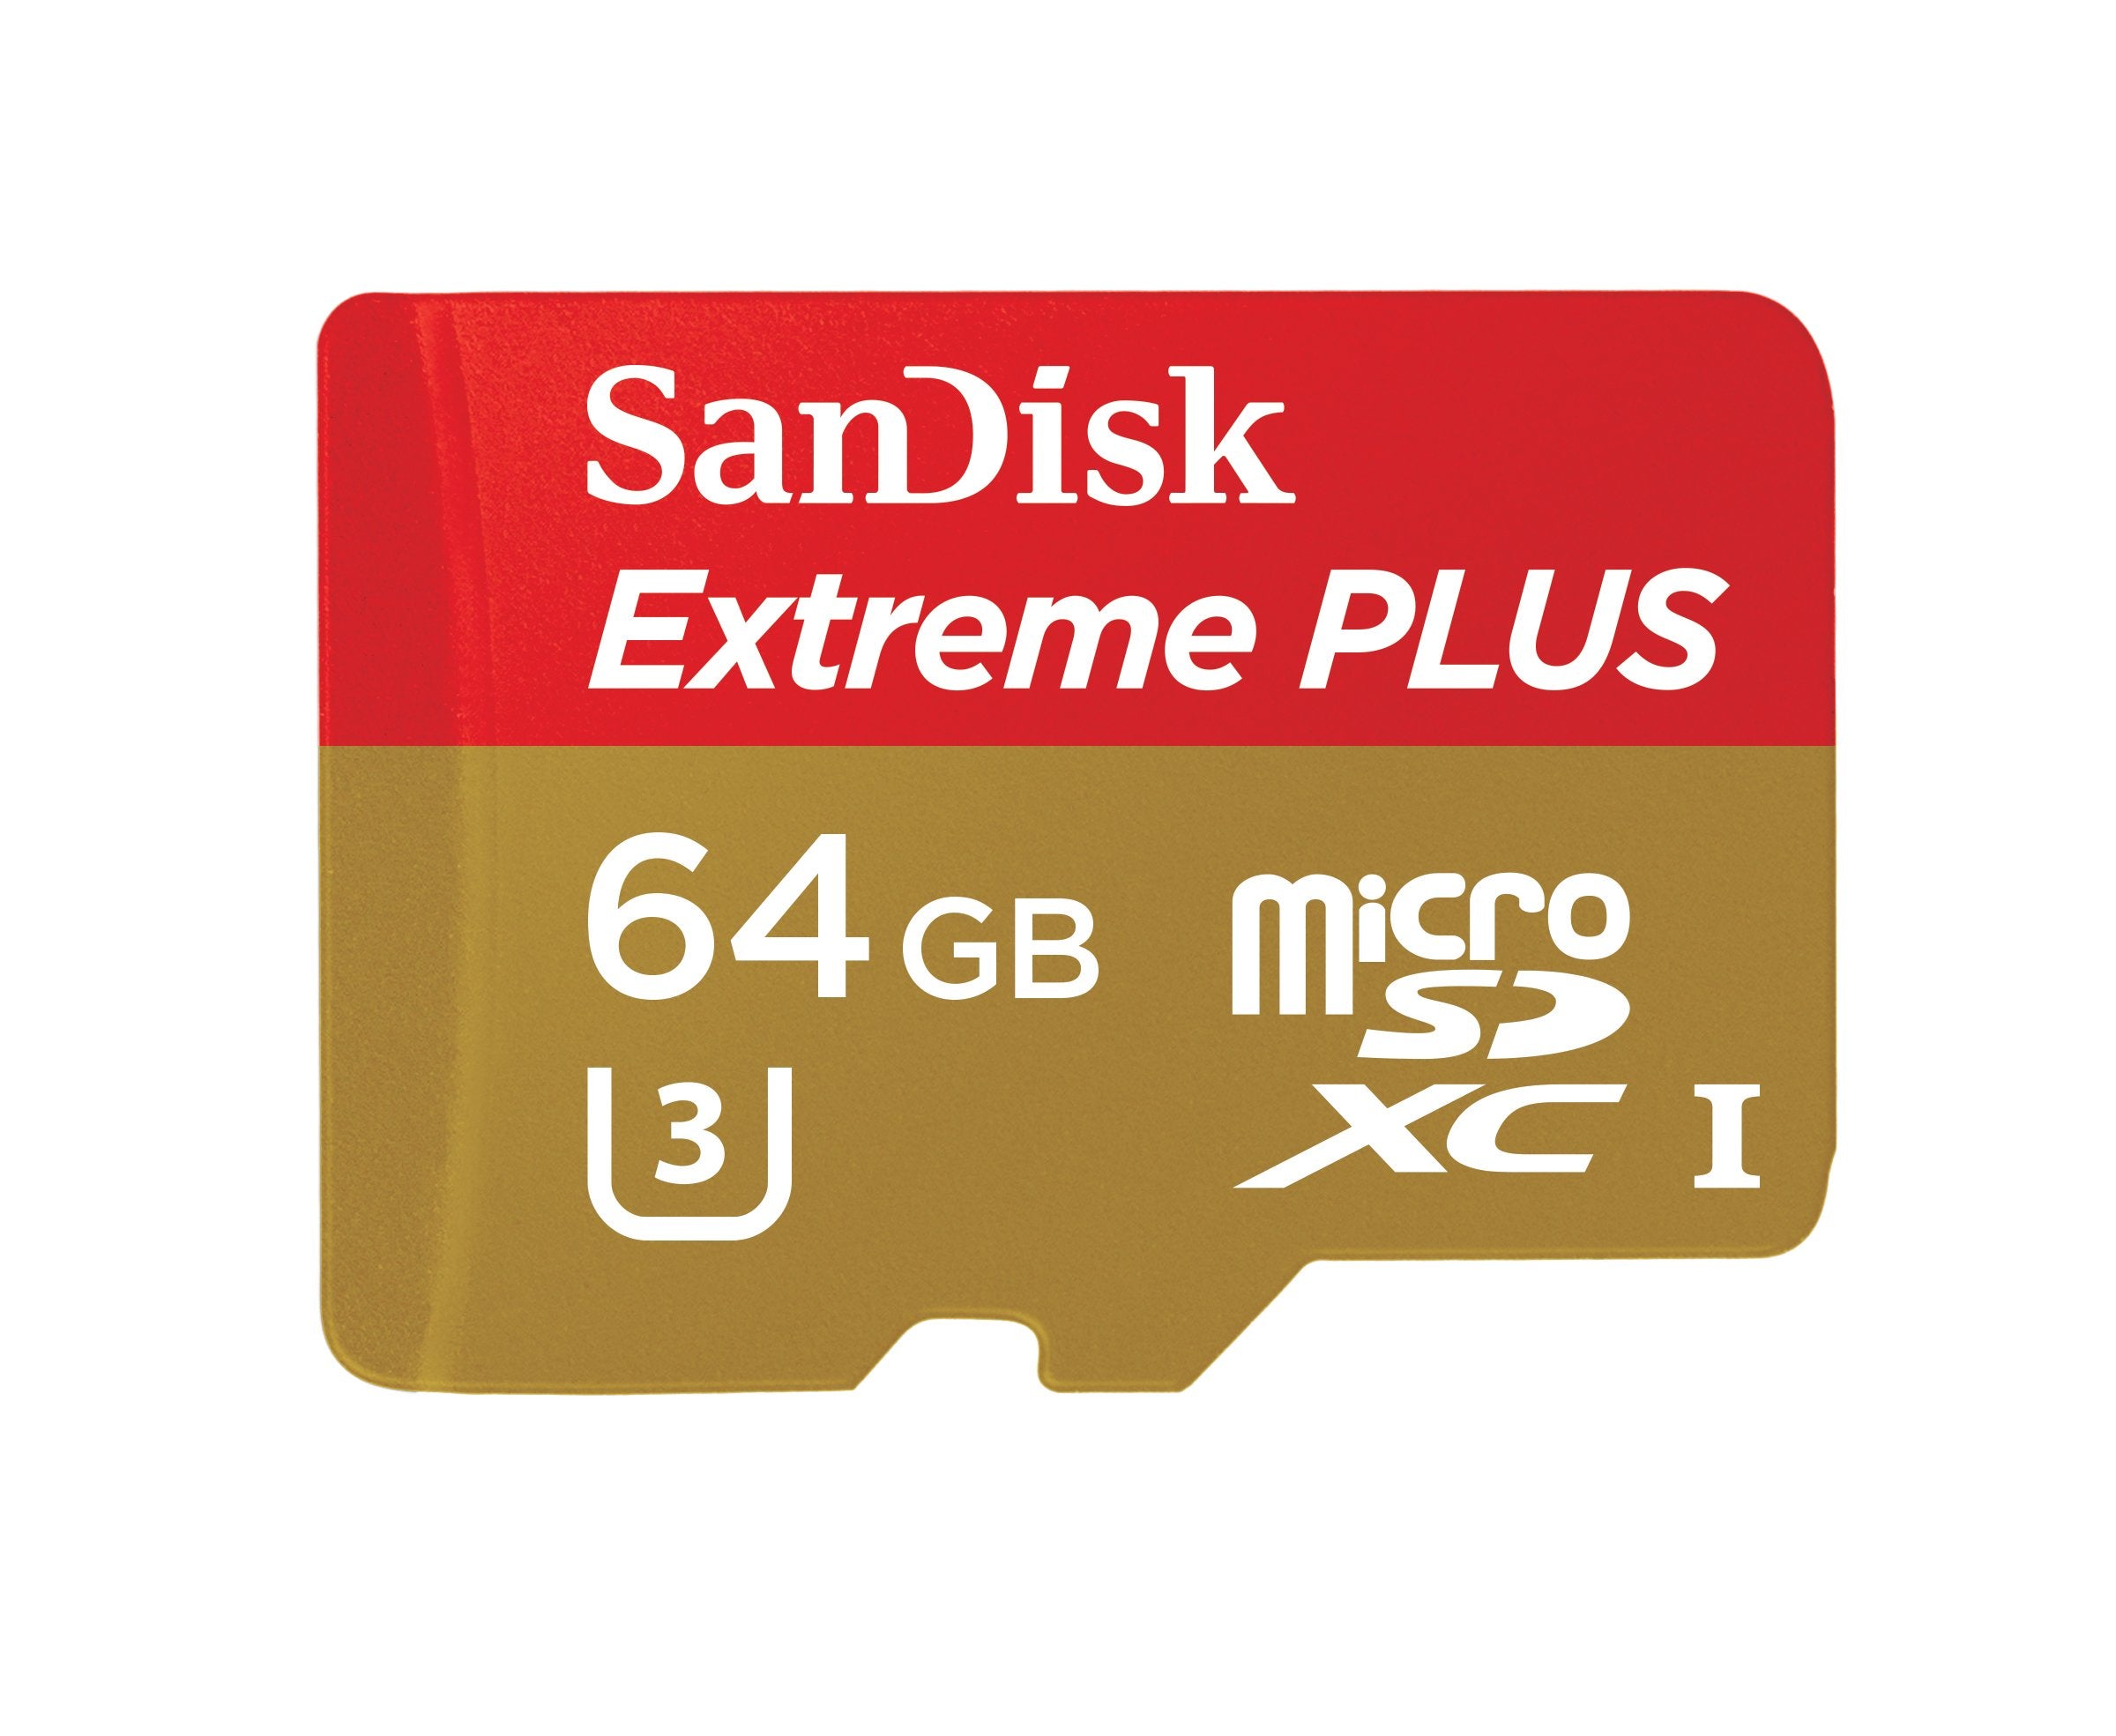 SanDisk Extreme PLUS 64GB microSDXC UHS-I/U3 Card with Adapter (SDSQXSG-064G)